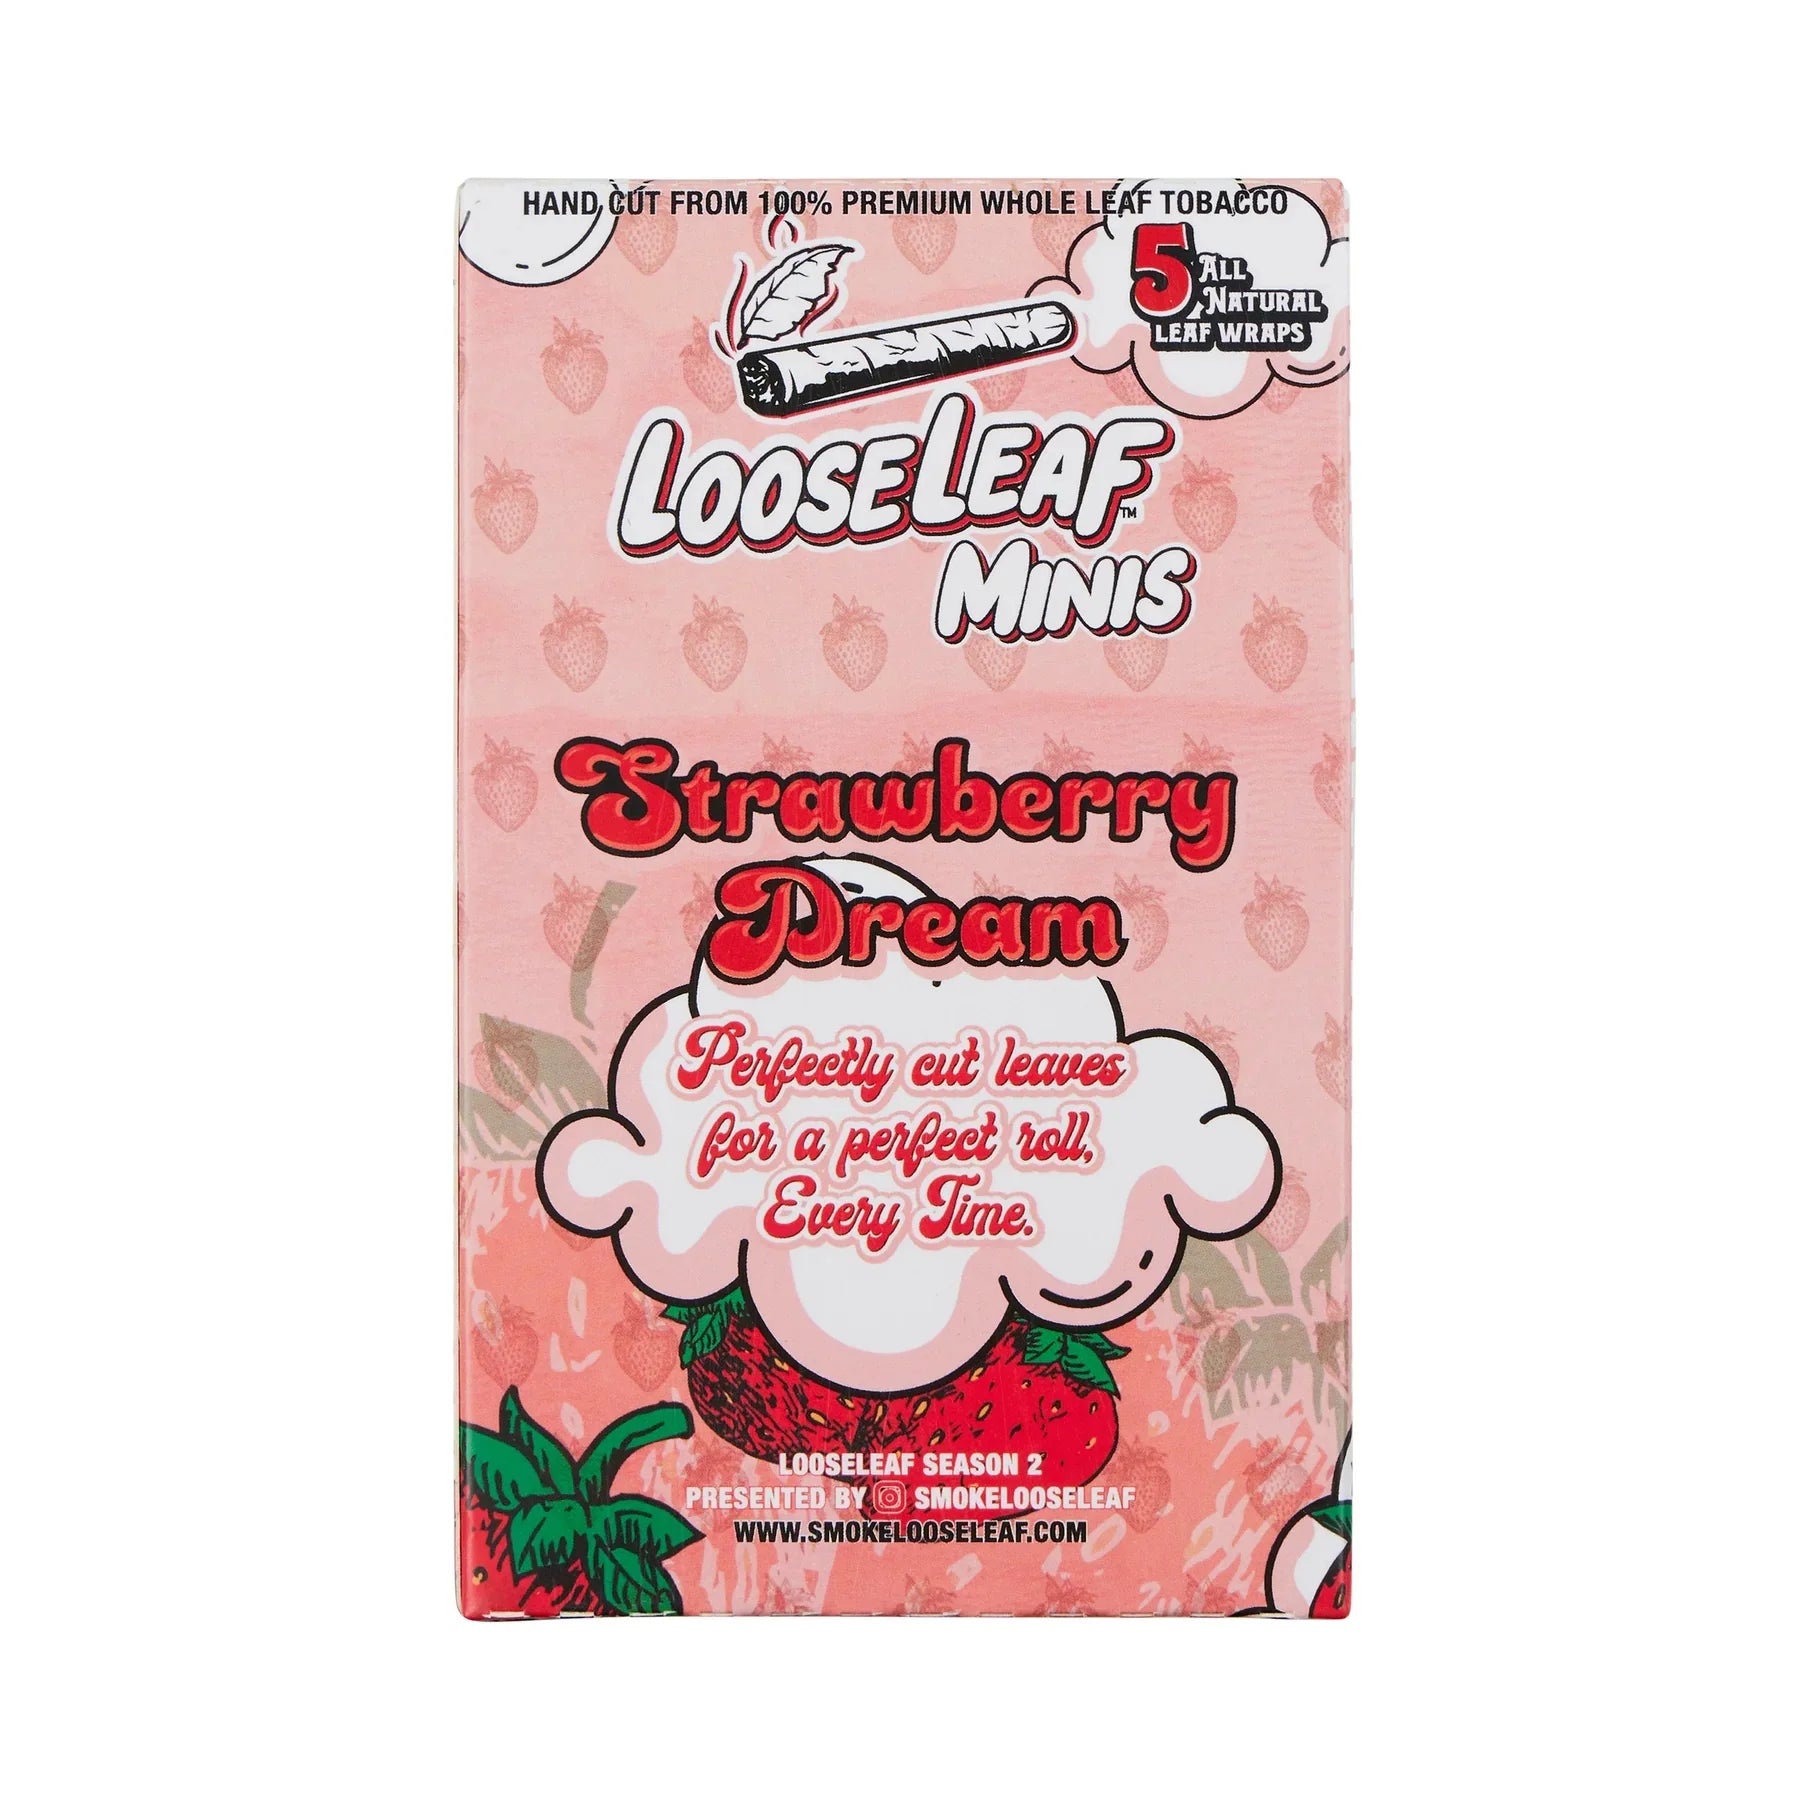 Loose leaf Strawberry Dream